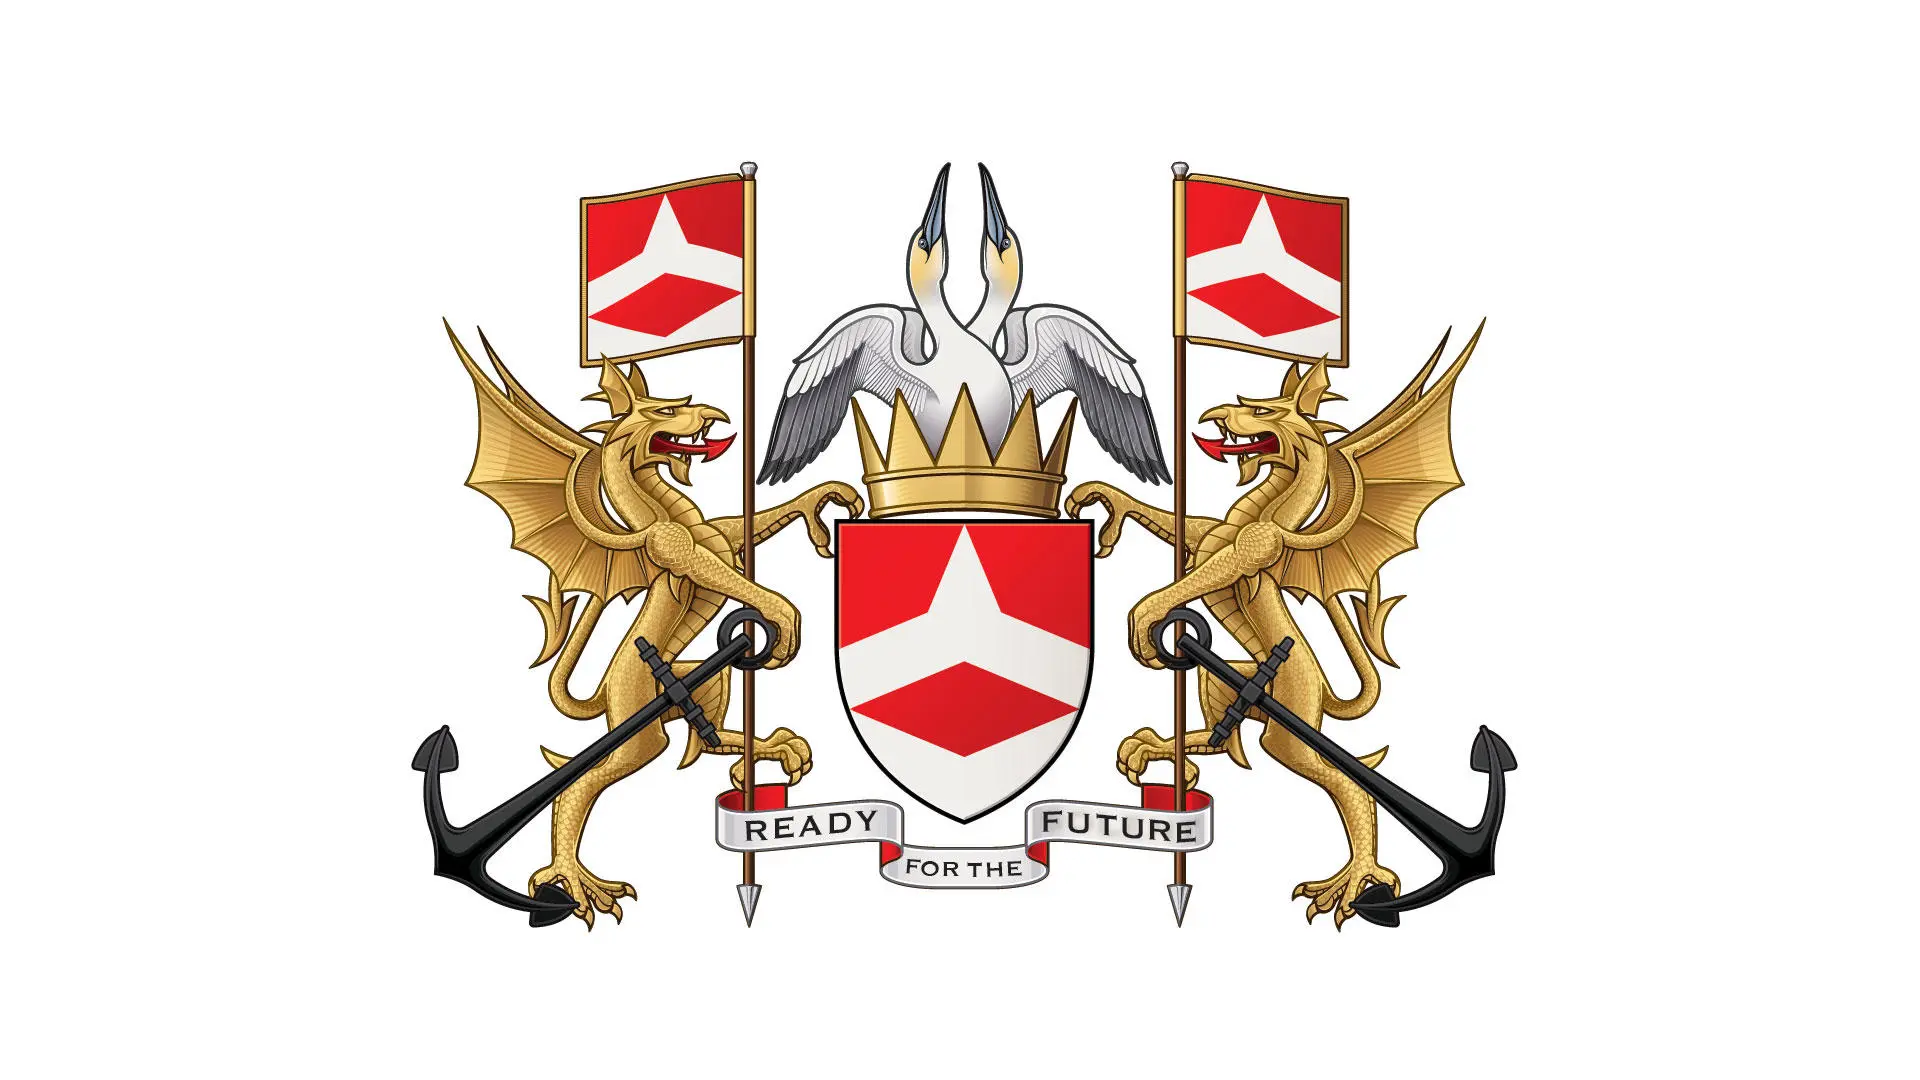 Solent University's Coat of Arms